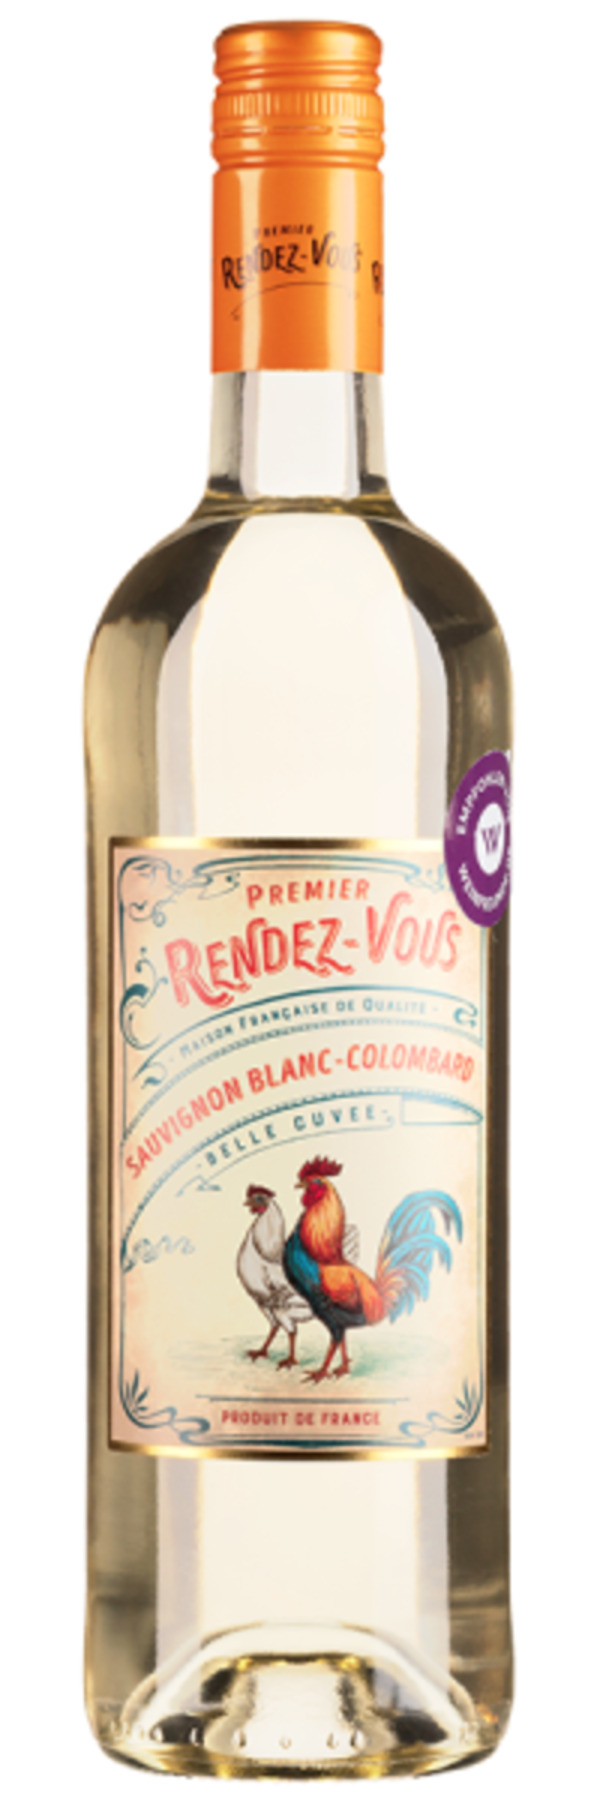 Bild 1 von Premier Rendez-Vous Sauvignon Blanc-Colombard - 2022 - Les Producteurs Réunis - Französischer Weißwein